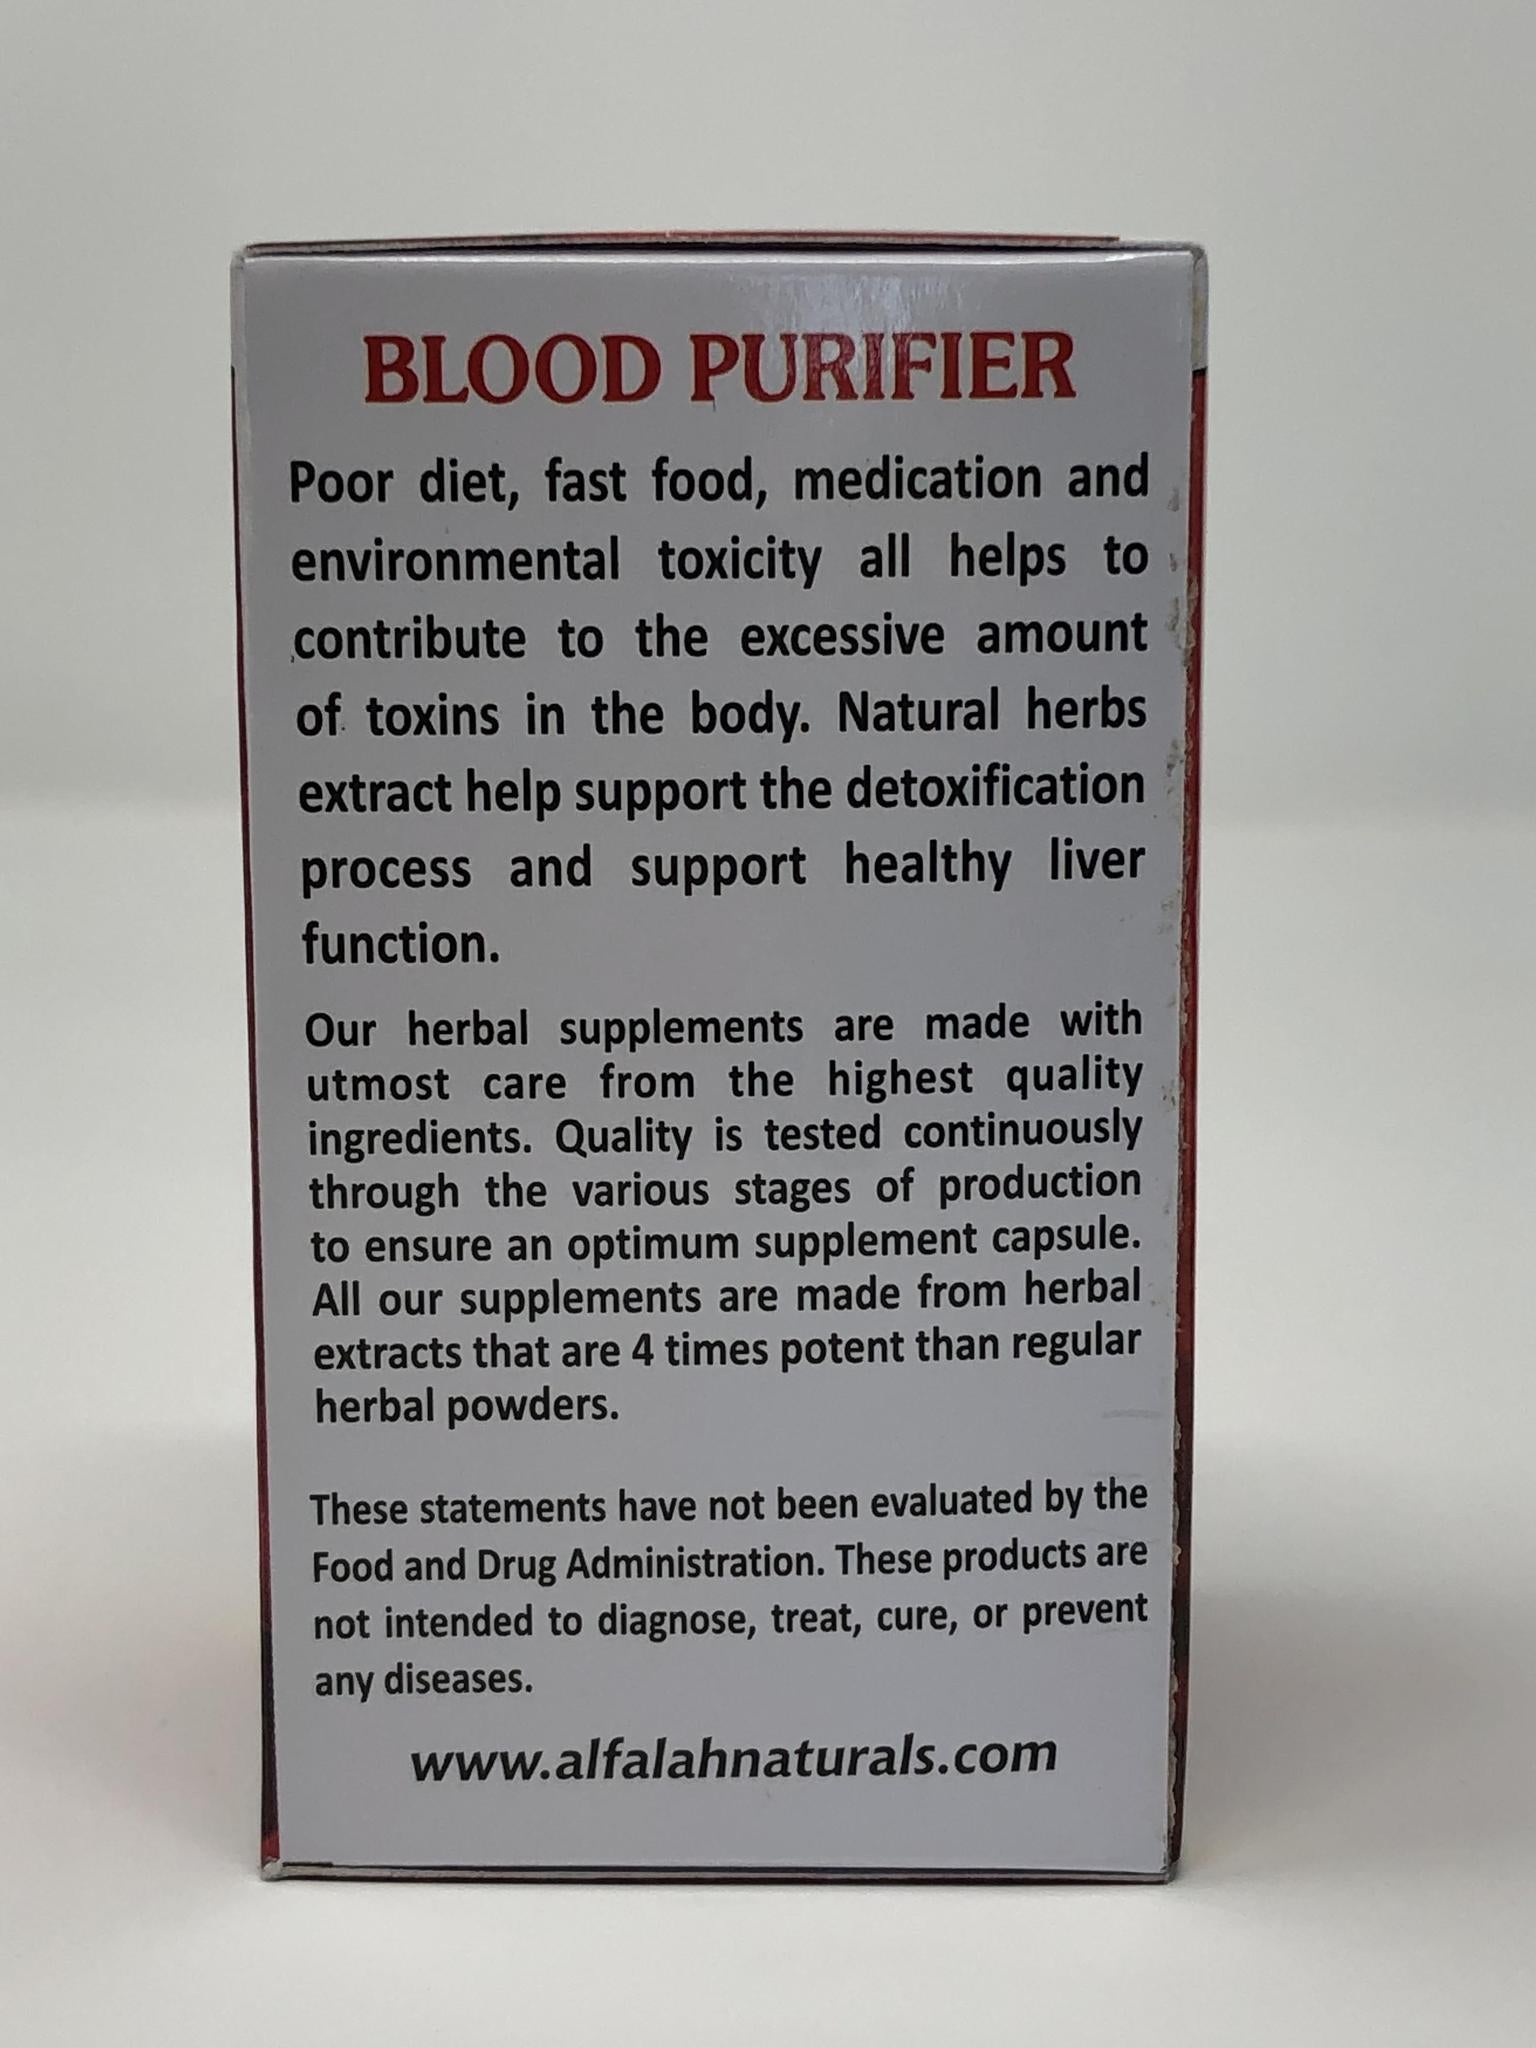 Blood Purifier Premium Extract Capsules 500 MG - 60 Vege Capsules